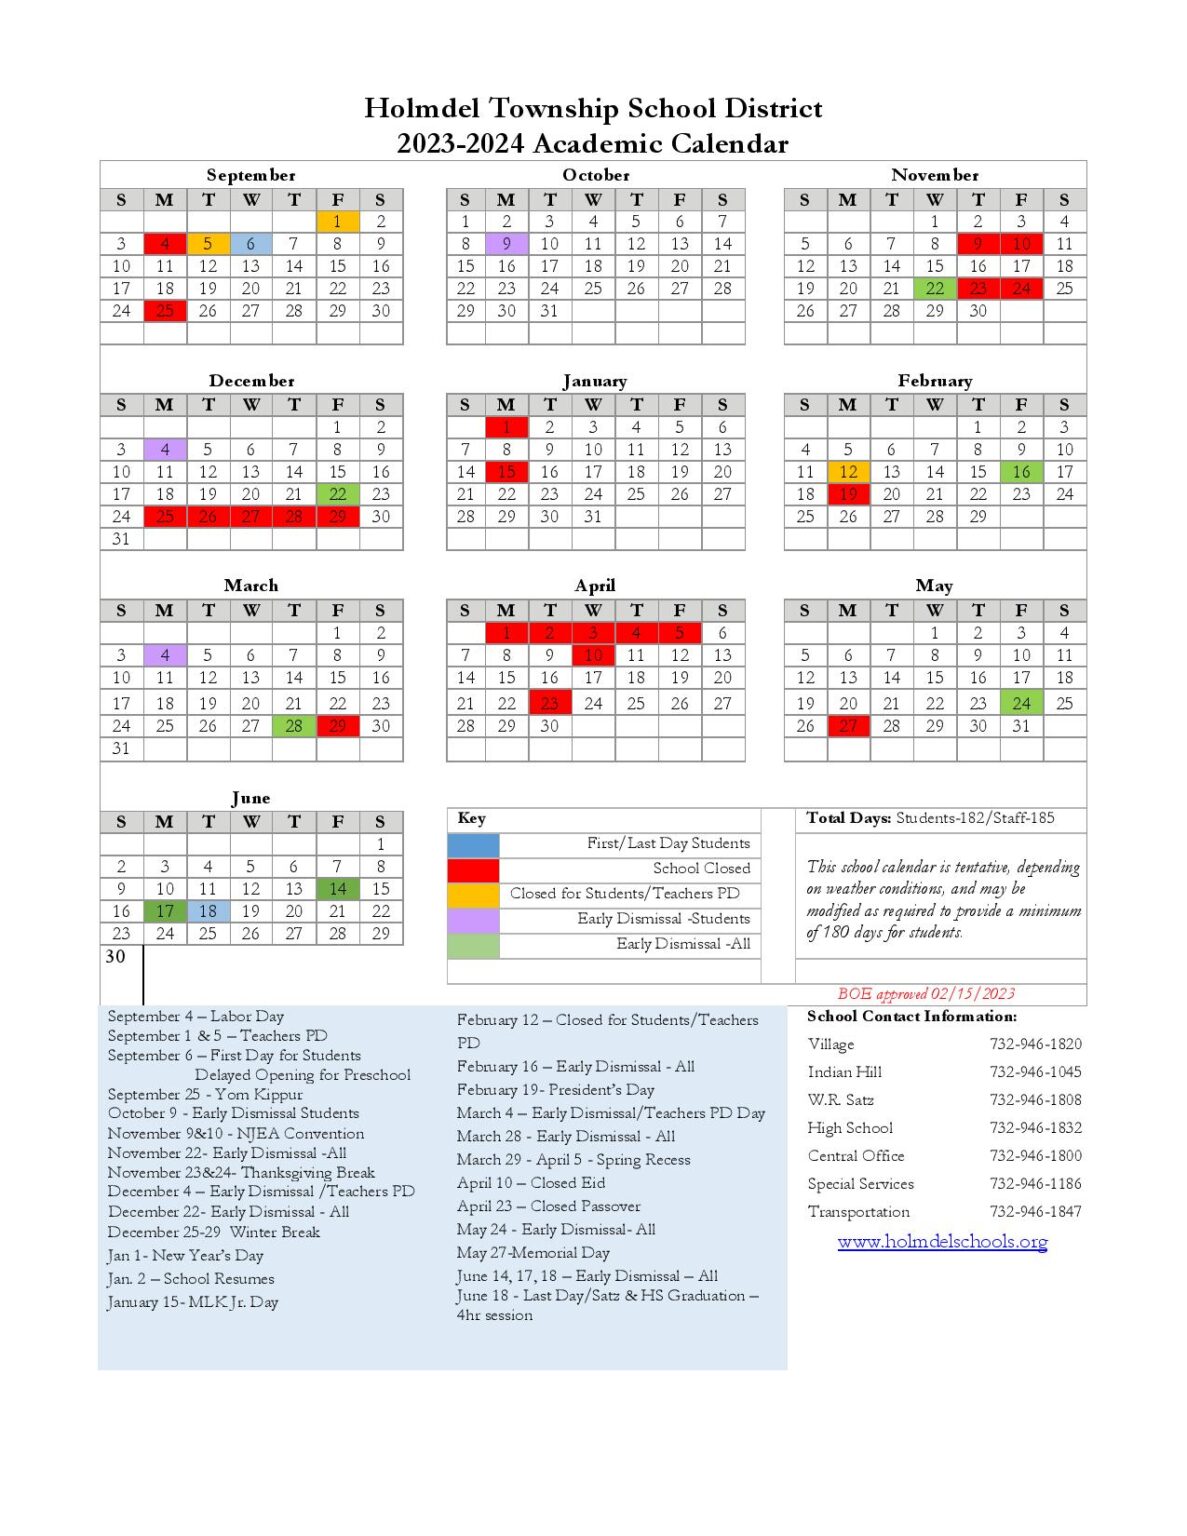 Holmdel Township Schools Calendar 20232024 (Academic Year)